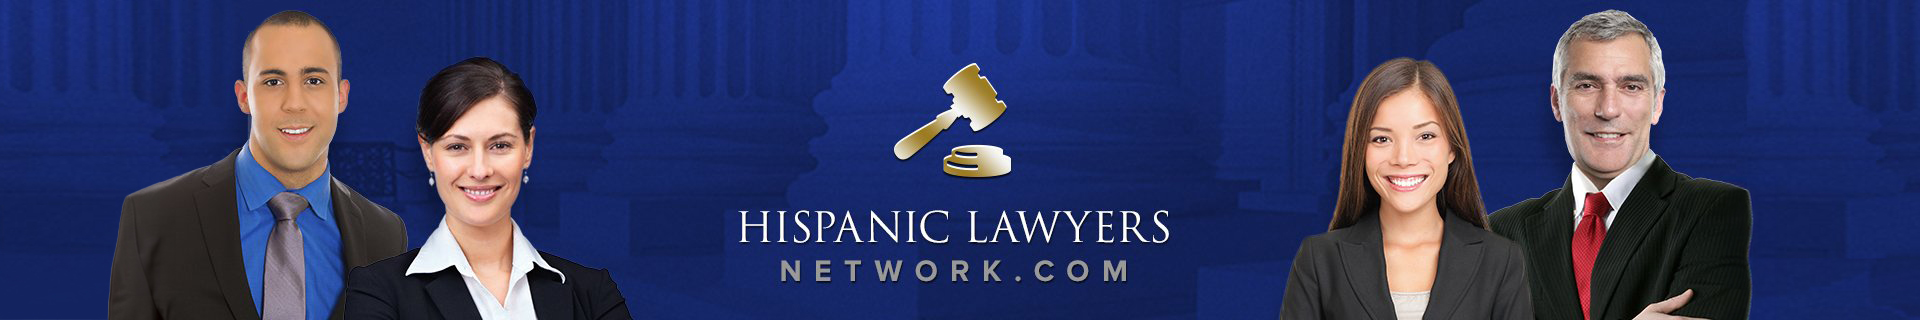 Hispanic Lawyers Network Banner